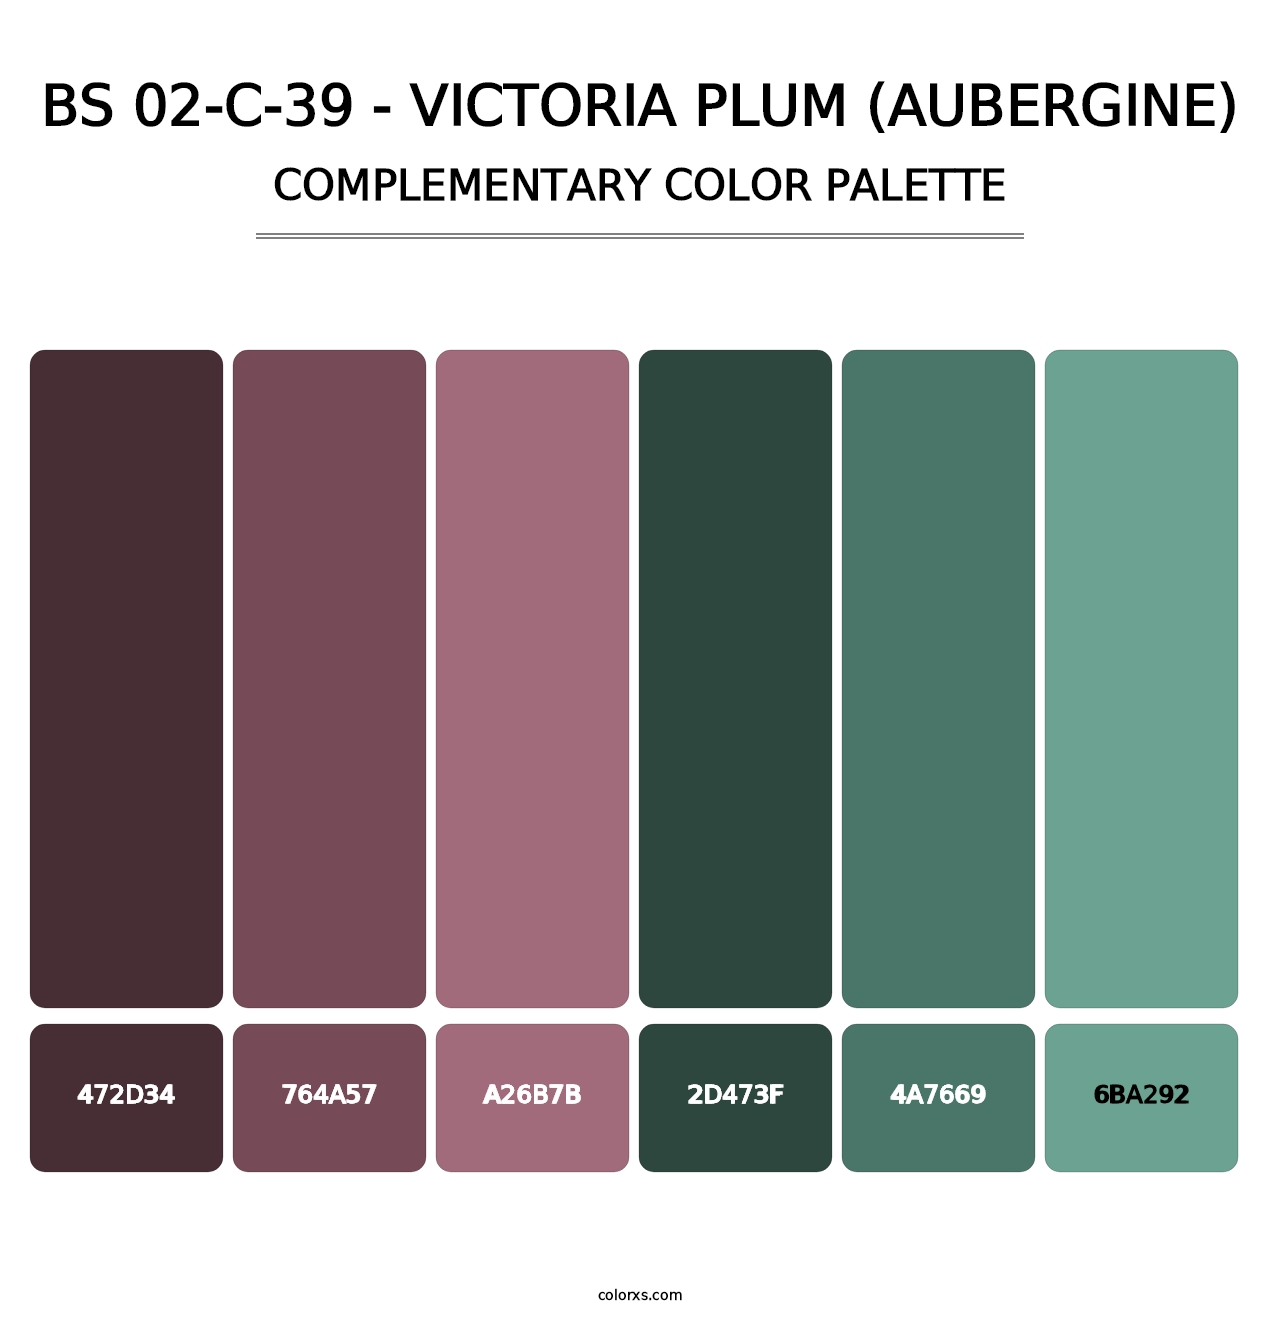 BS 02-C-39 - Victoria Plum (Aubergine) - Complementary Color Palette